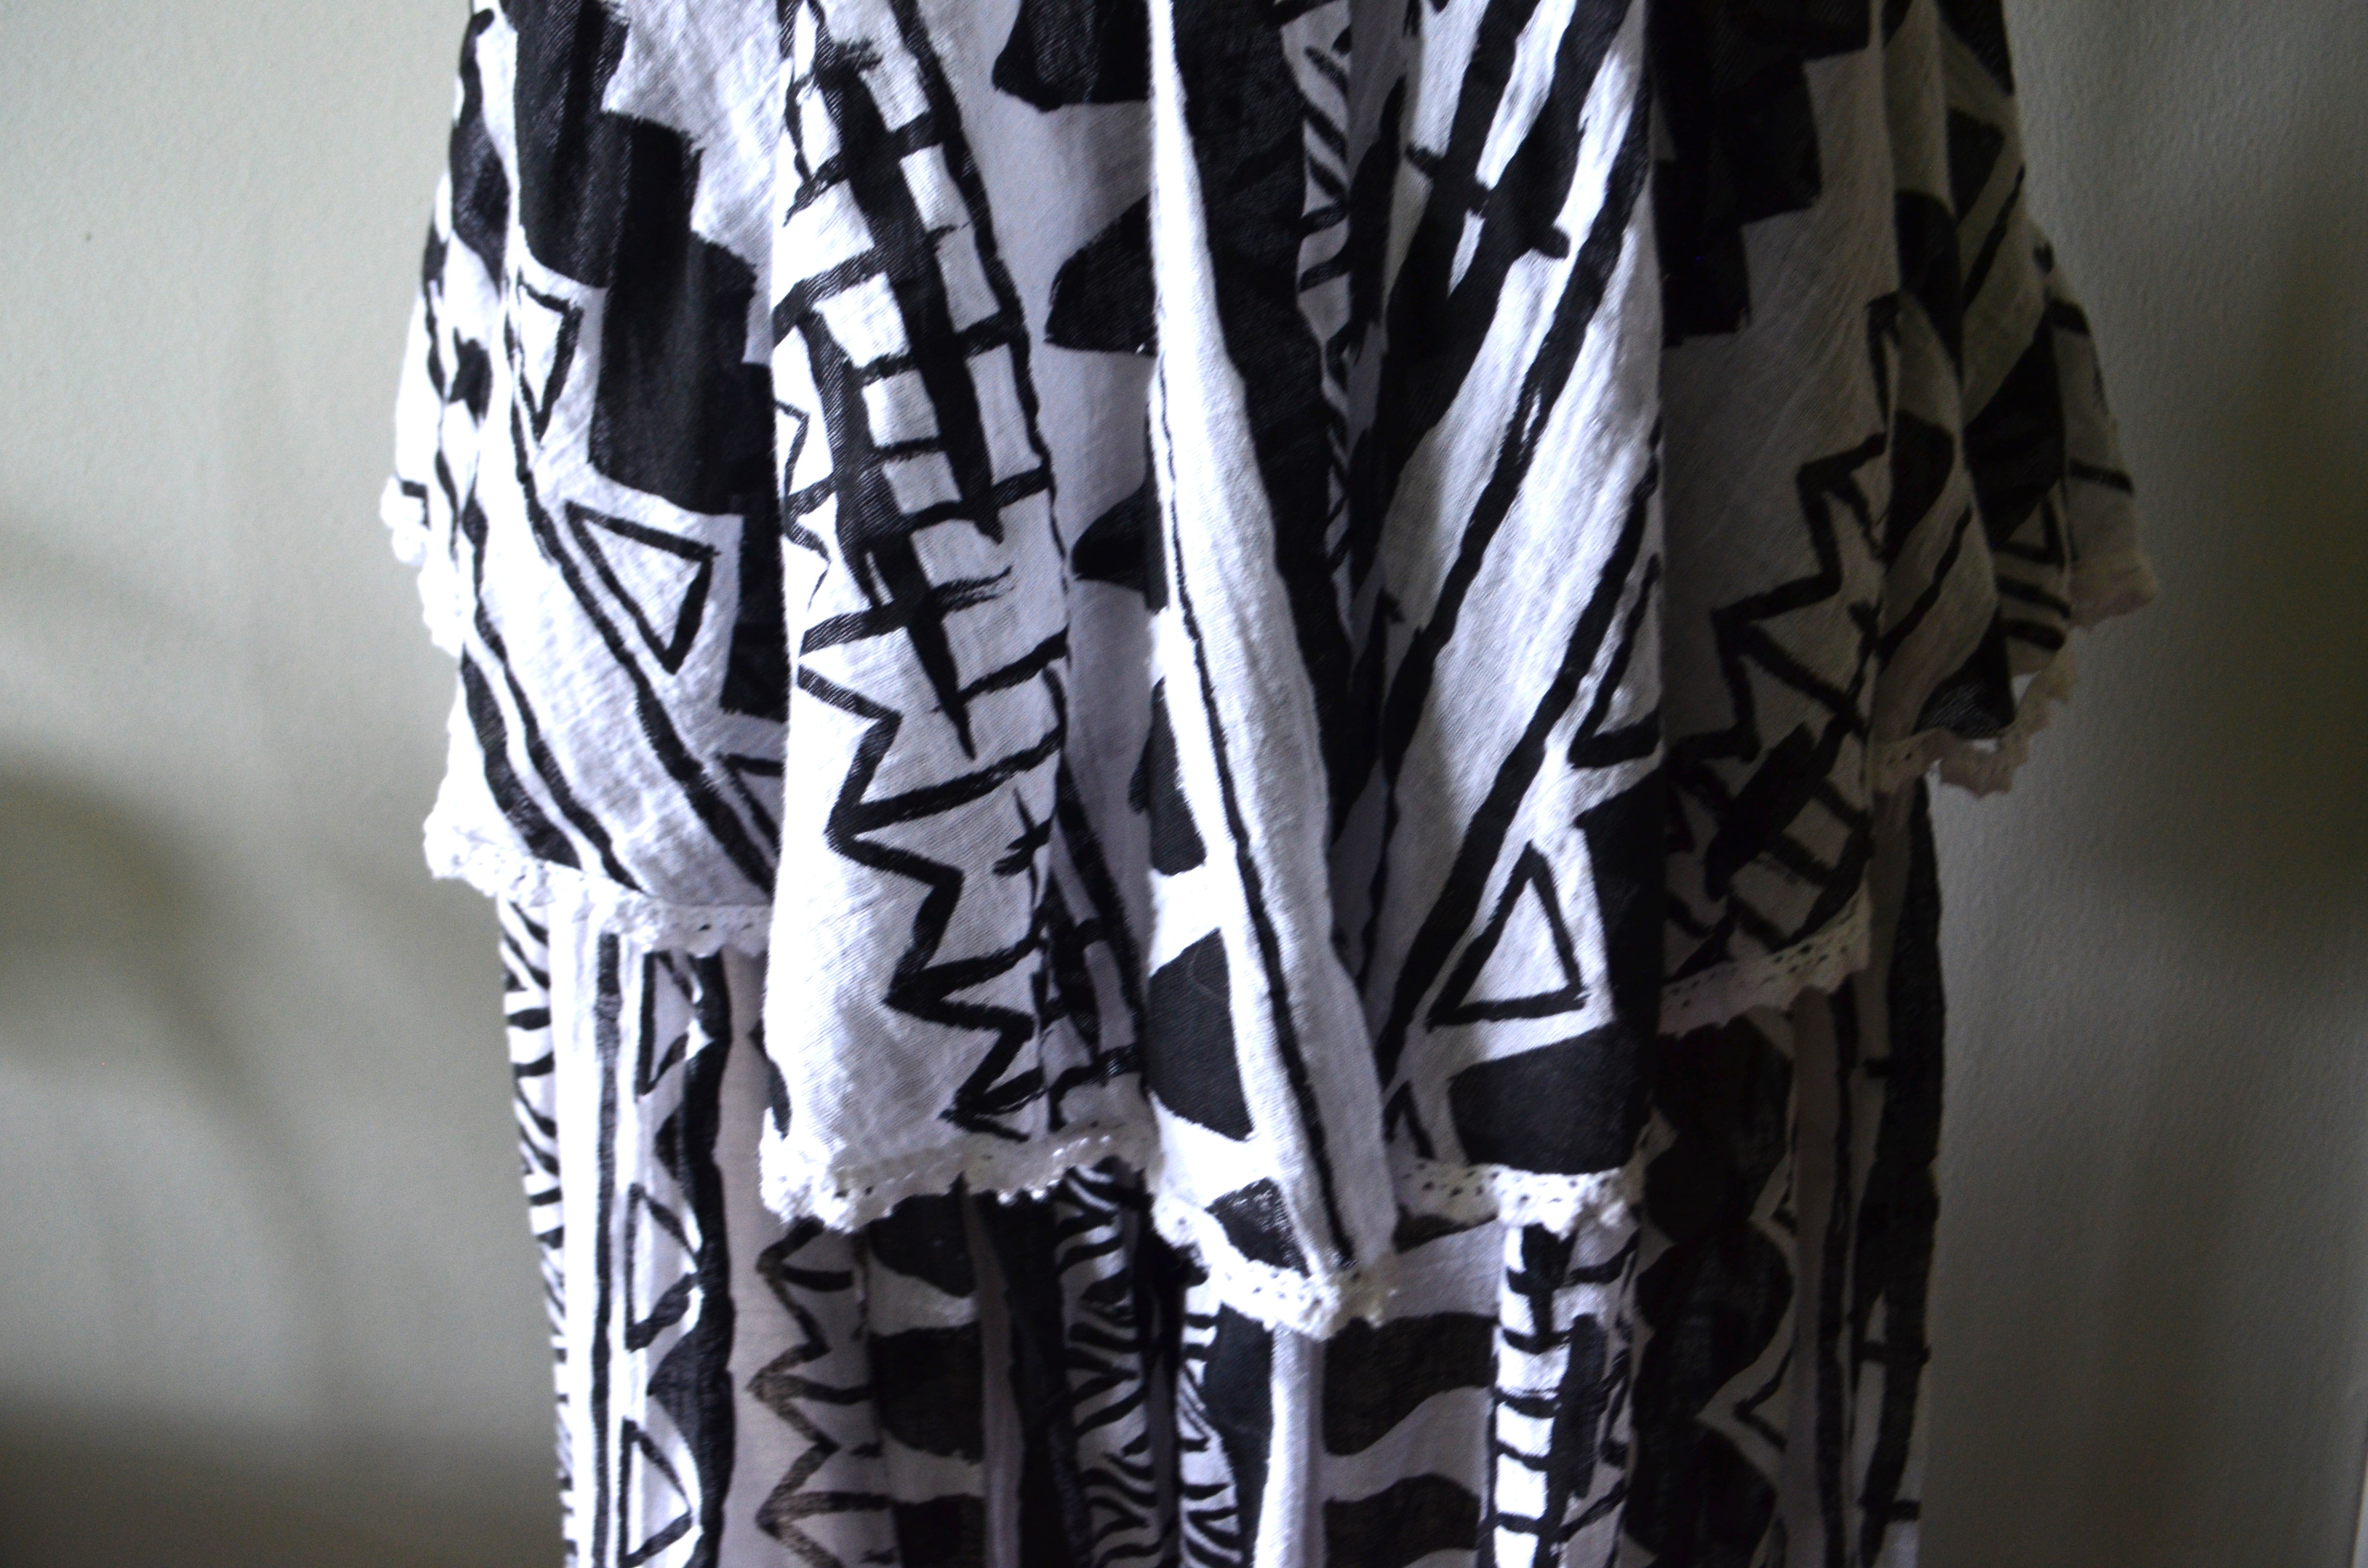 Neiman Marcus PRIAMO cotton African Ikat sheer matching set pants loungewear cover up vacation